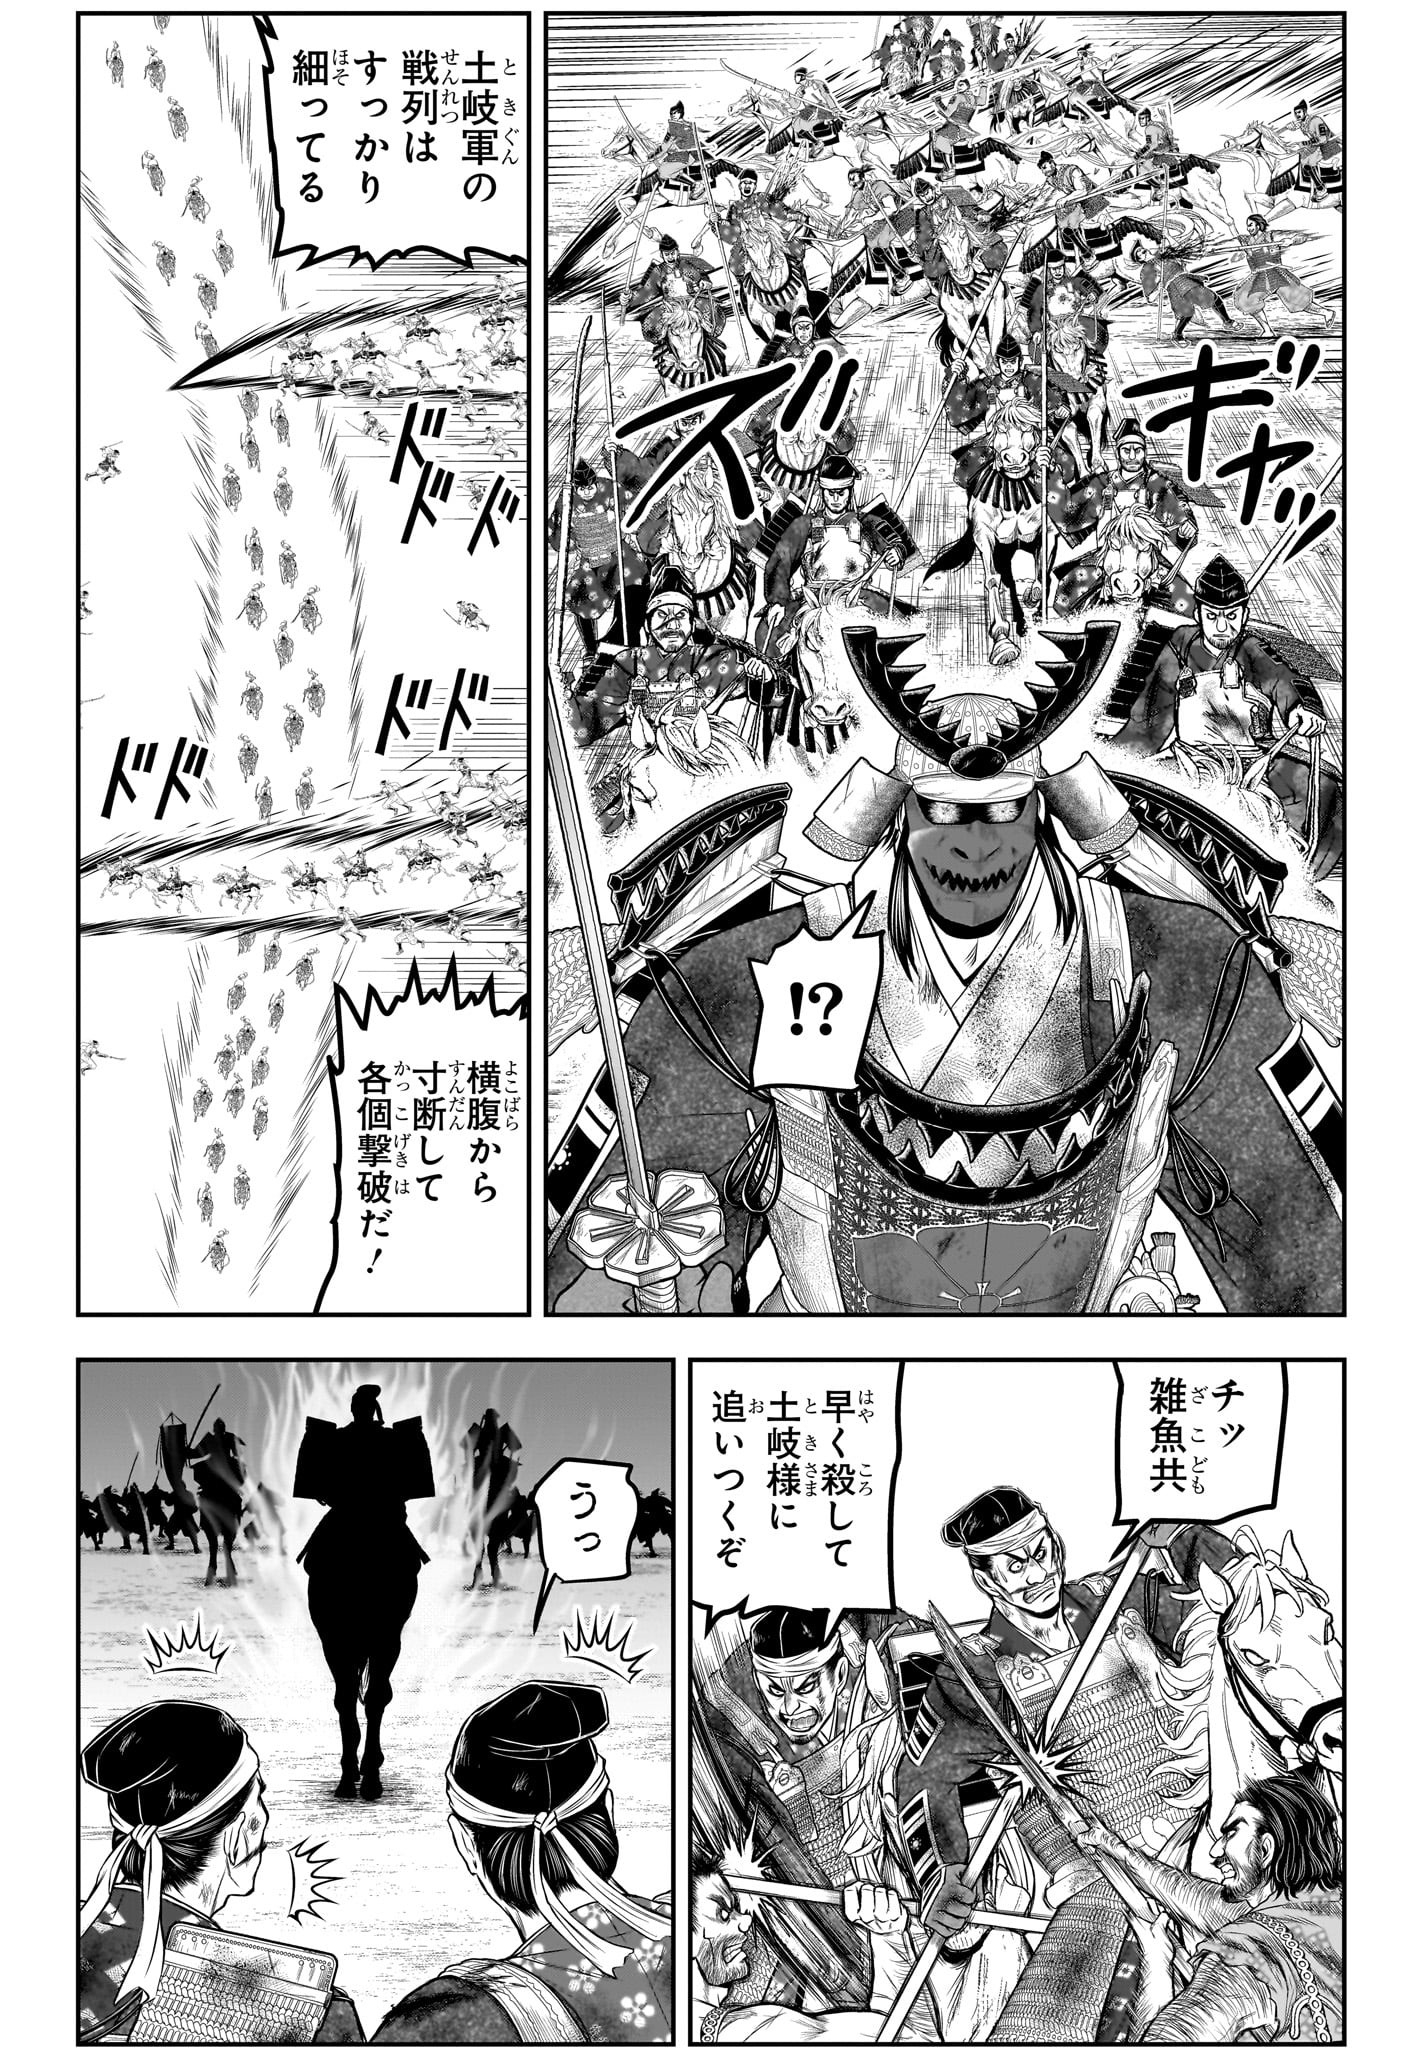 Nige Jouzu no Wakagimi - Chapter 145 - Page 2